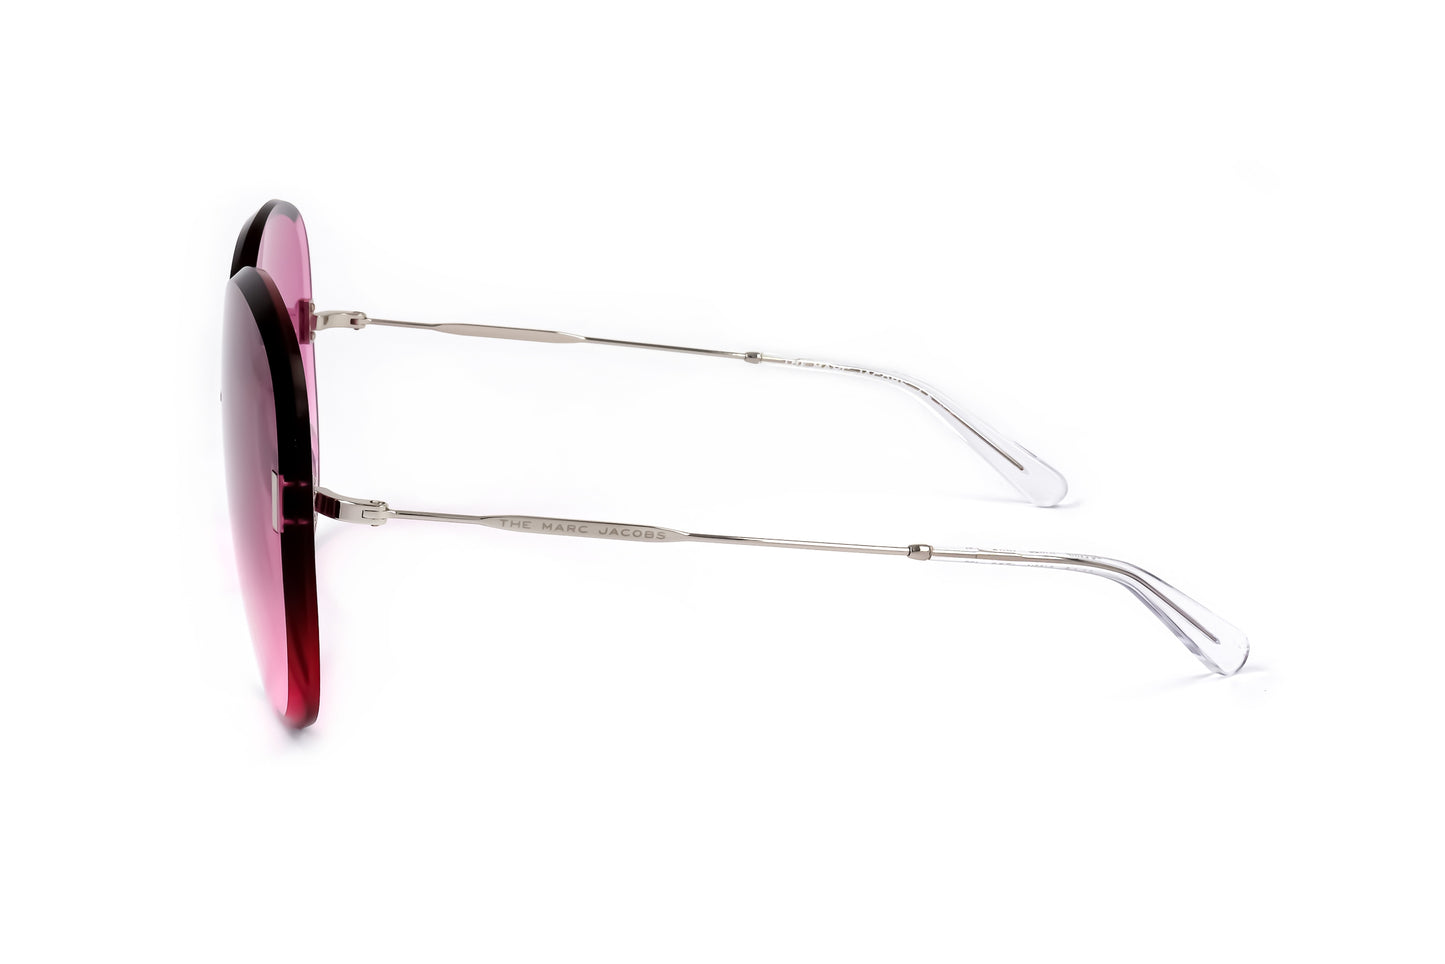 Marc Jacobs Womens Sunglasses MARC 519 S 010 70 09 150 PALLADIUM